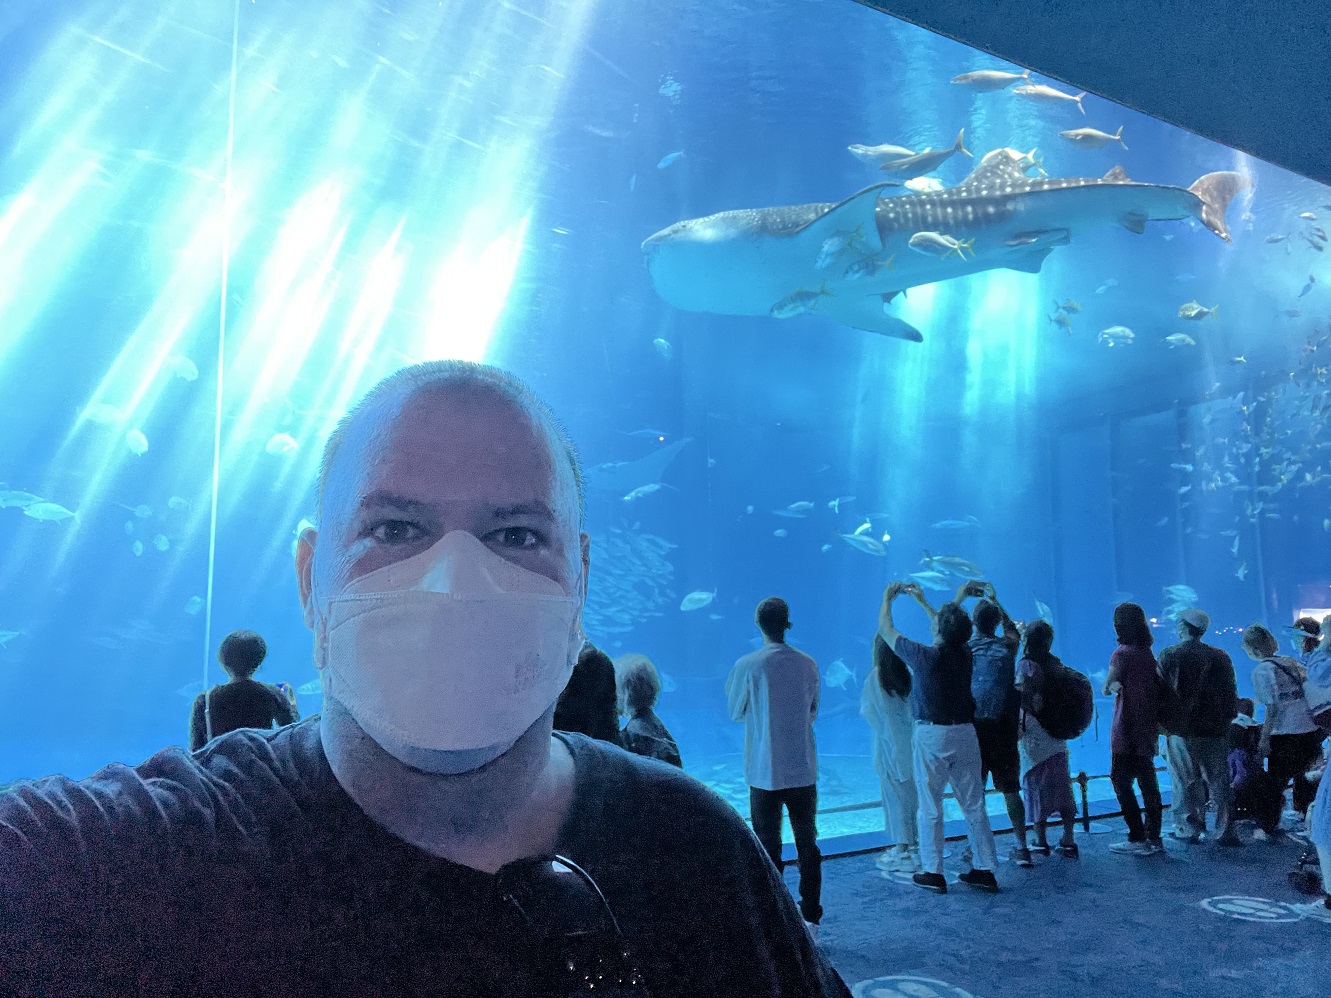 Haz-Matt with whale shark at Aquarium in Okinawa, Japan